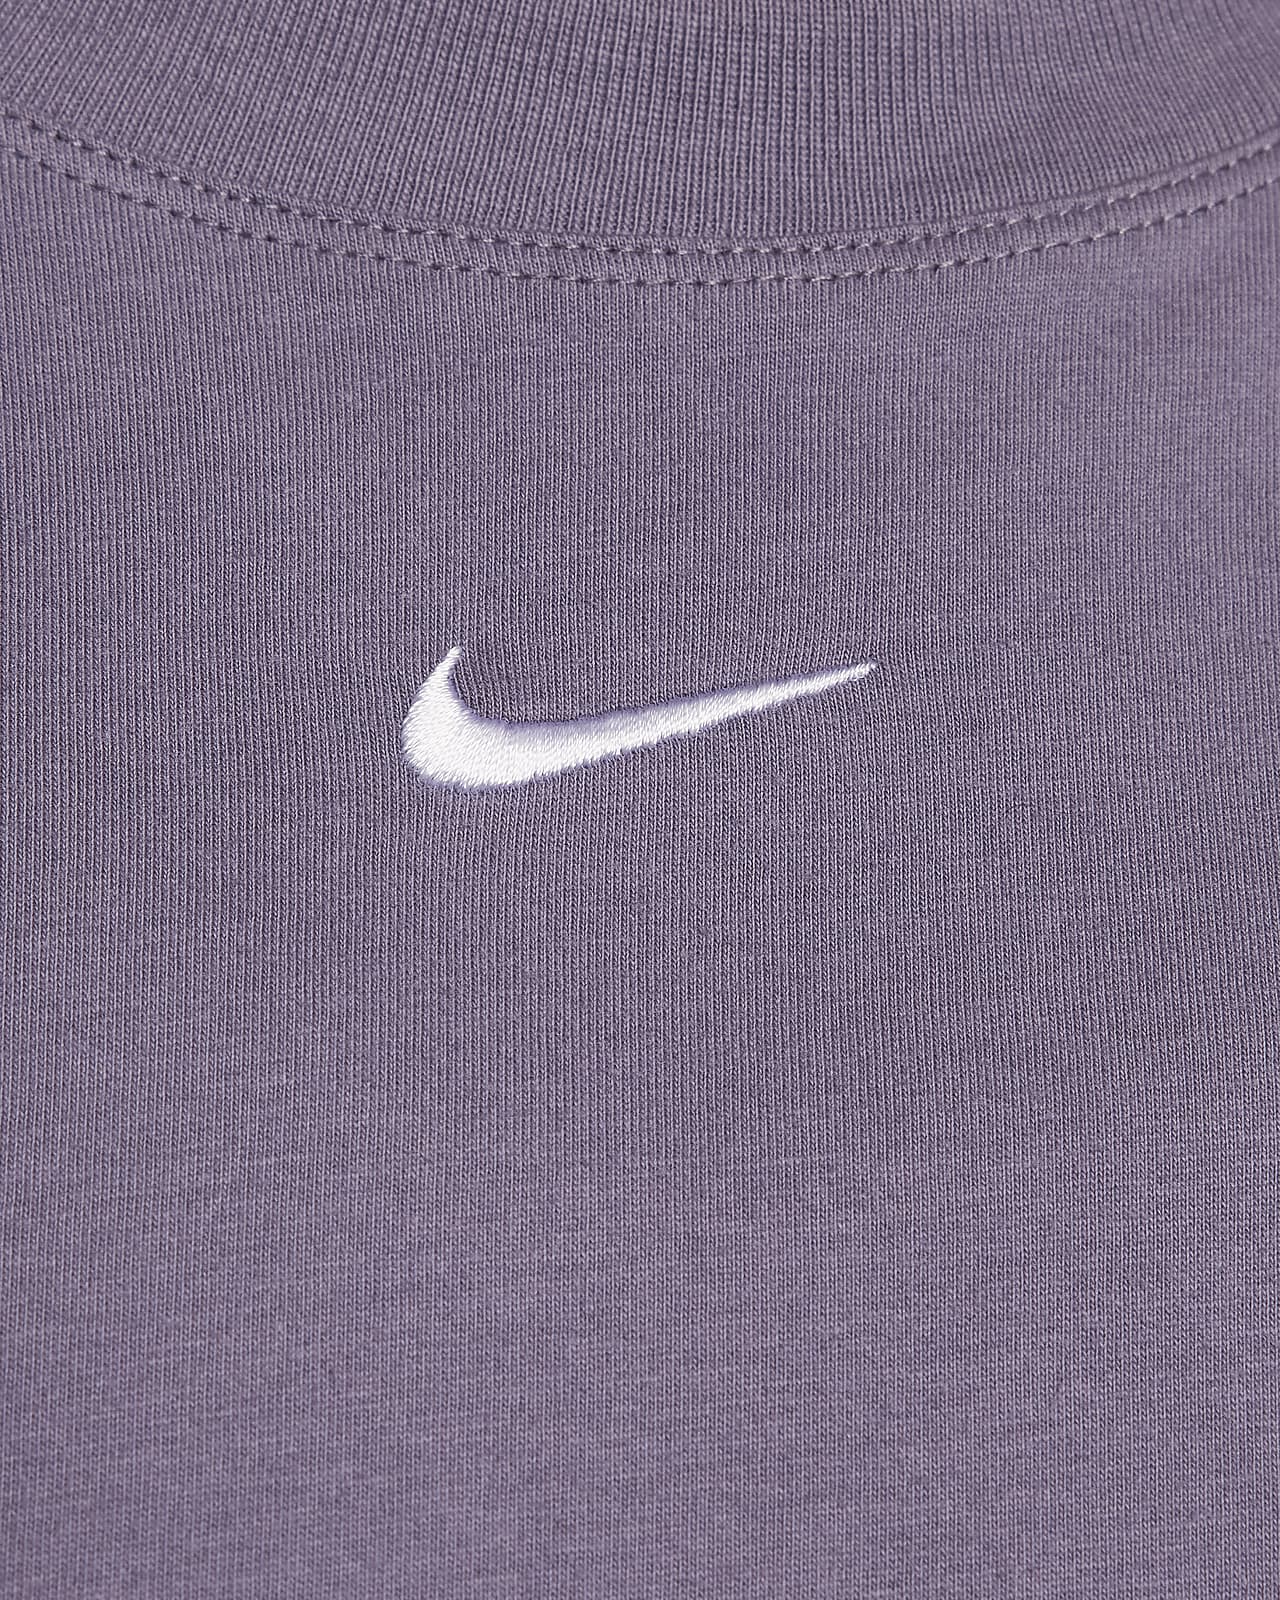 Nike Sportswear Essential Women's T-Shirt. Nike RO